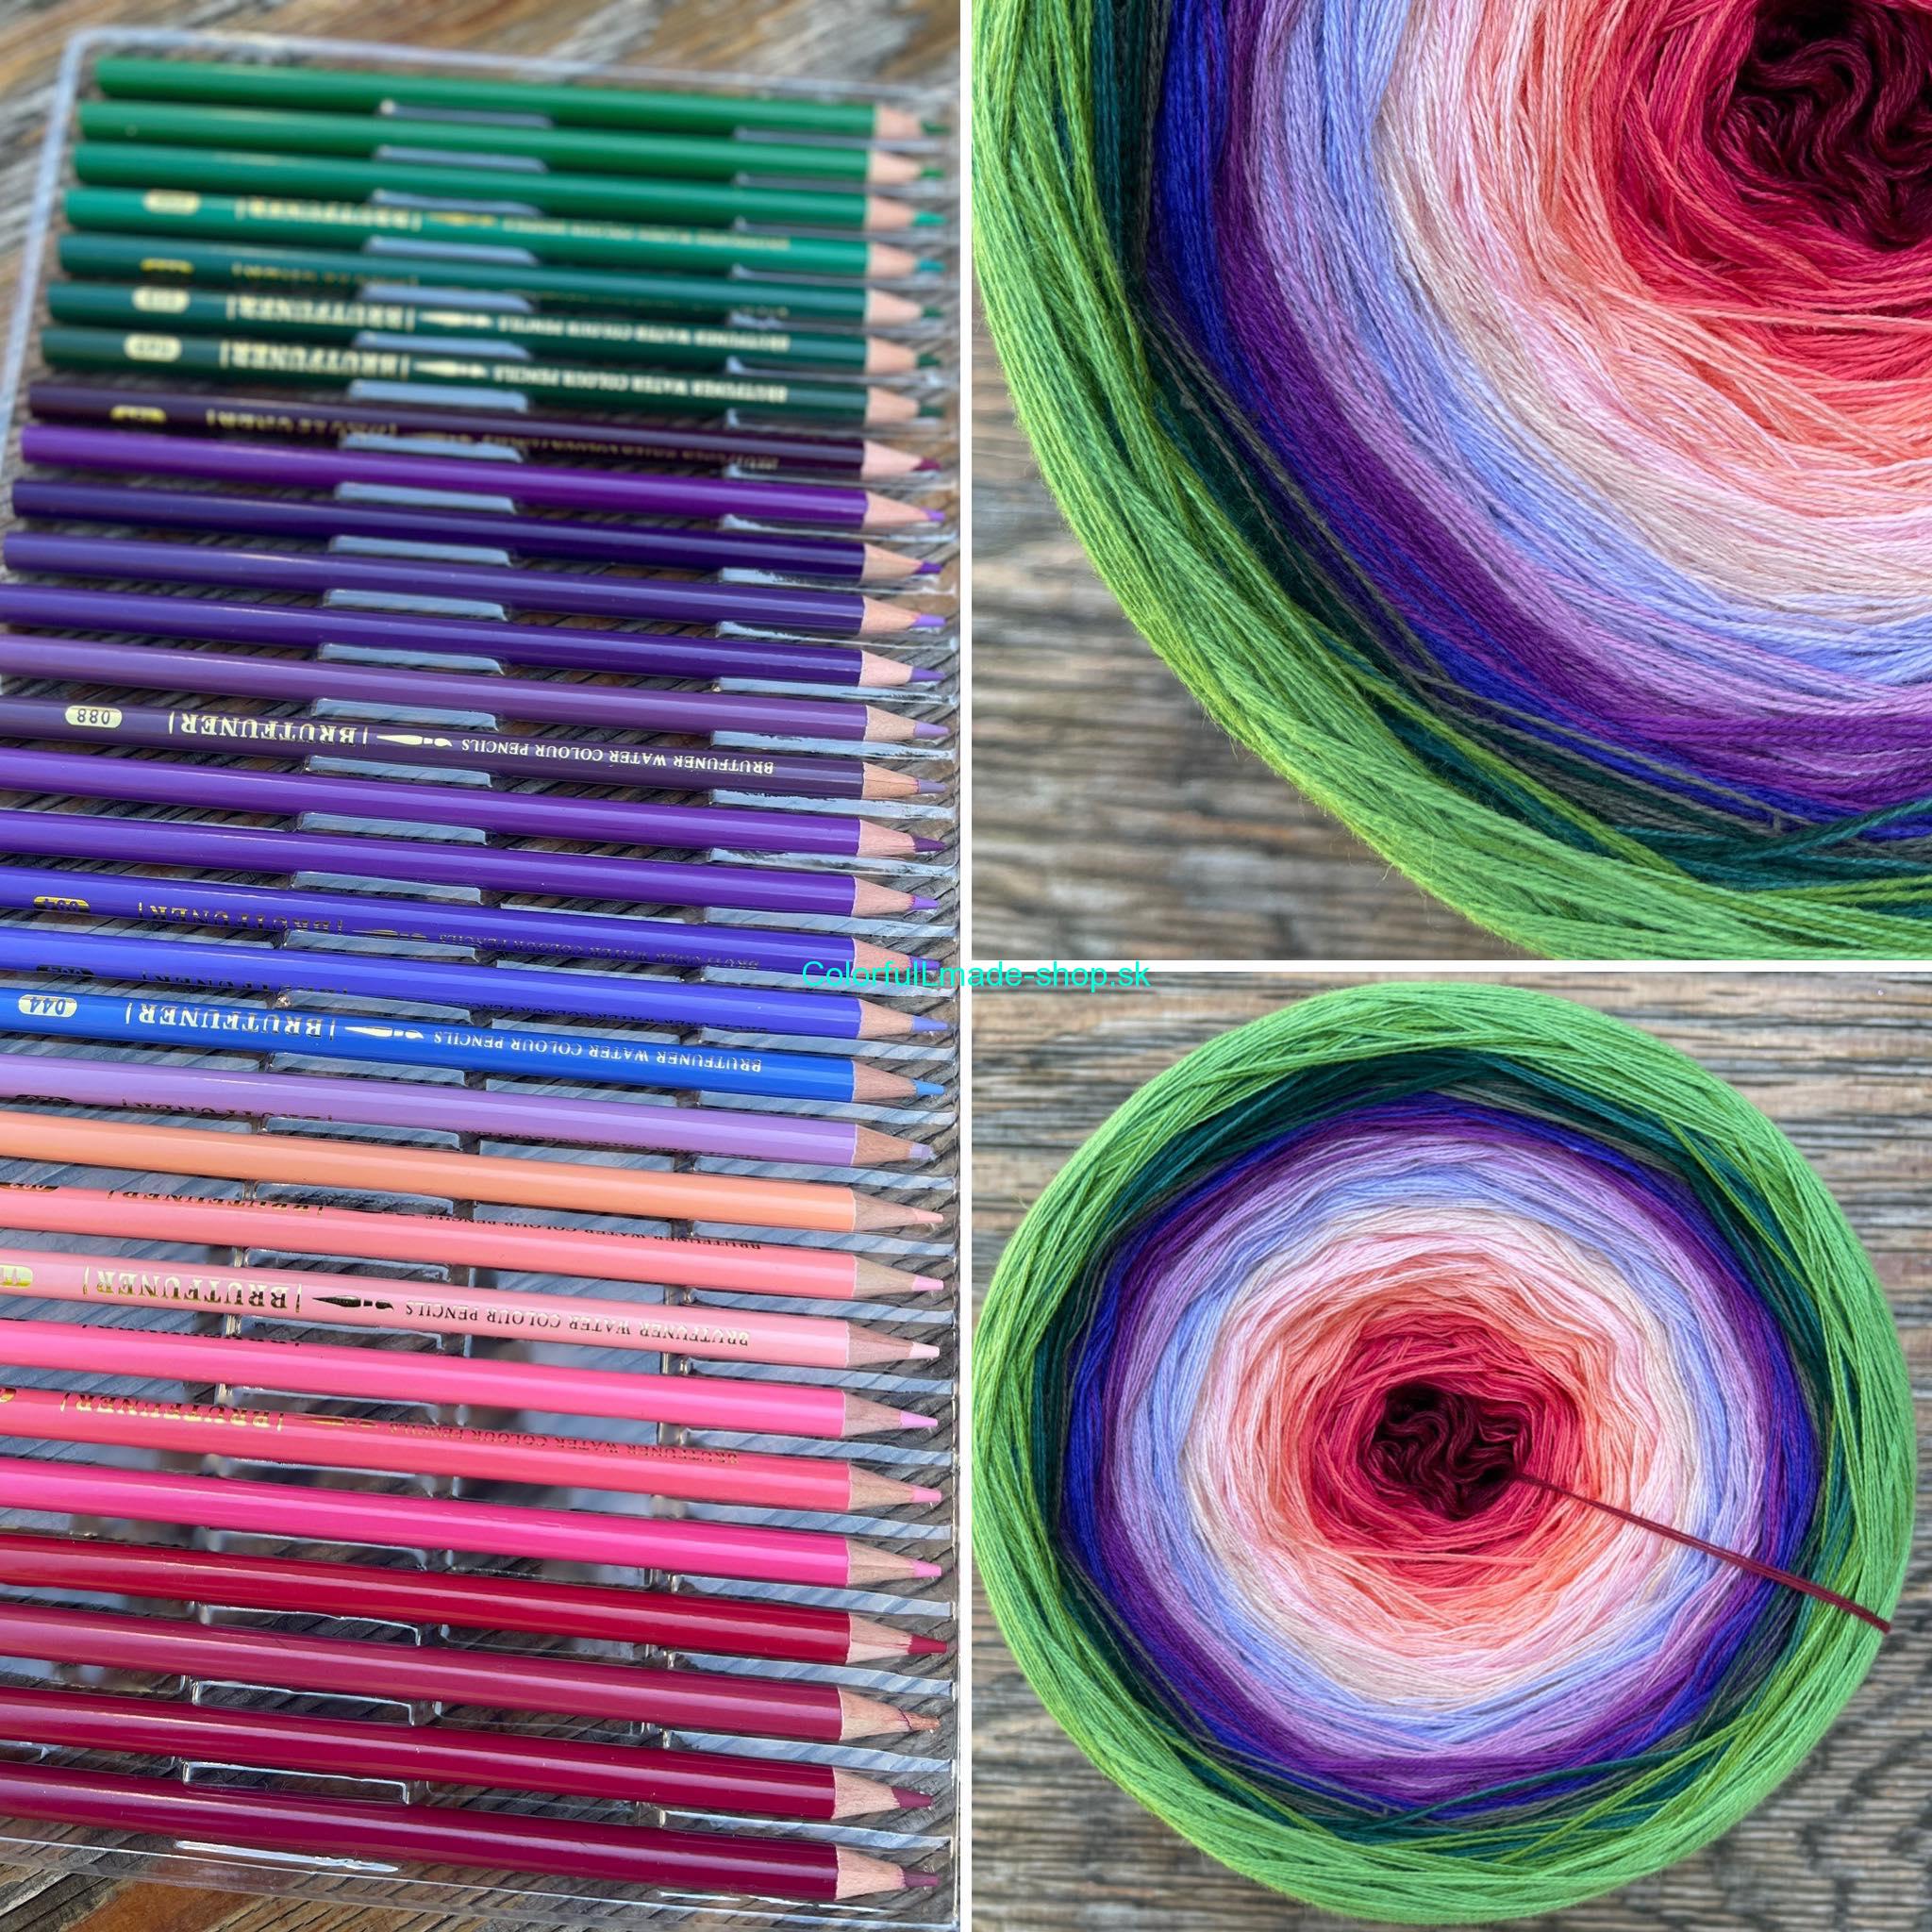 Magic Beauty - 20 Colors - Pencils IV. 4ply / 2500m